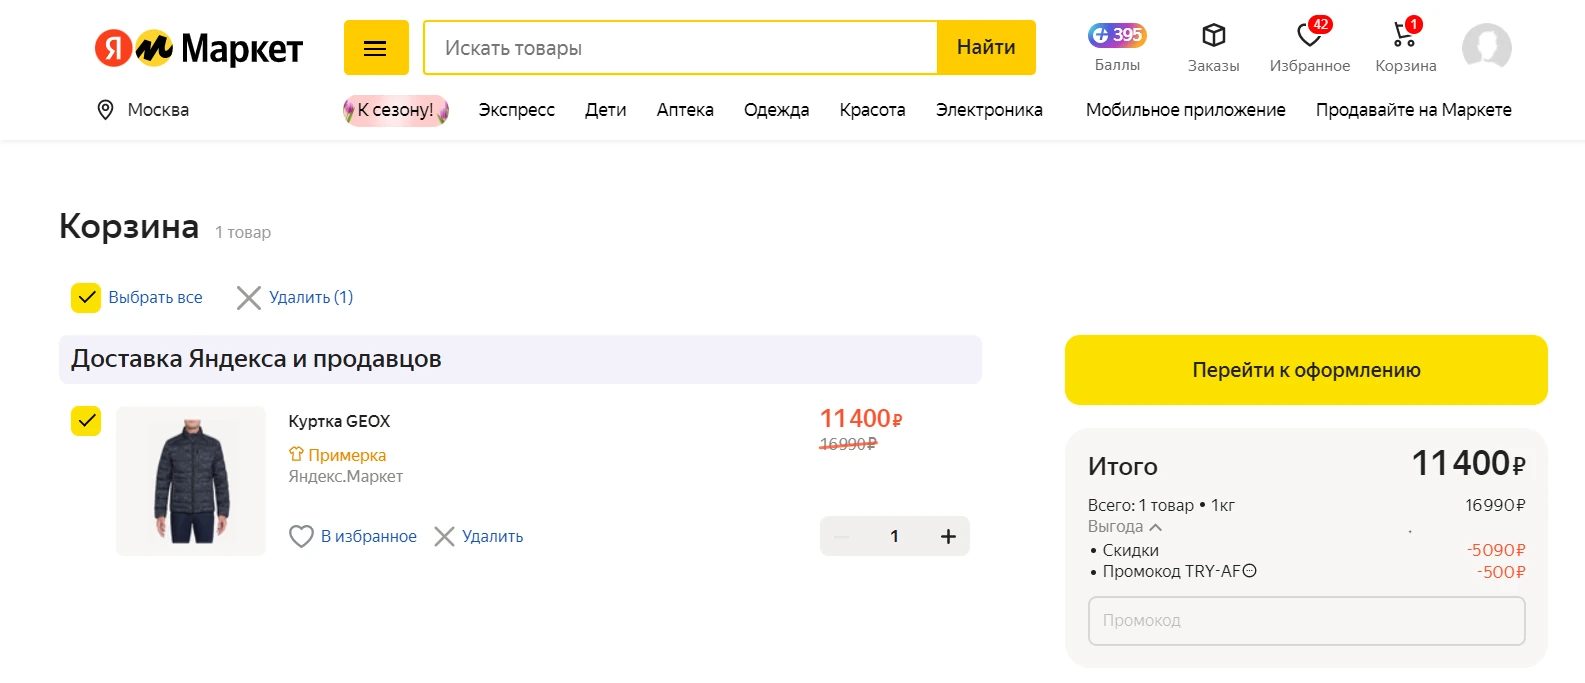 Скидка по промокоду на Яндекс Маркете